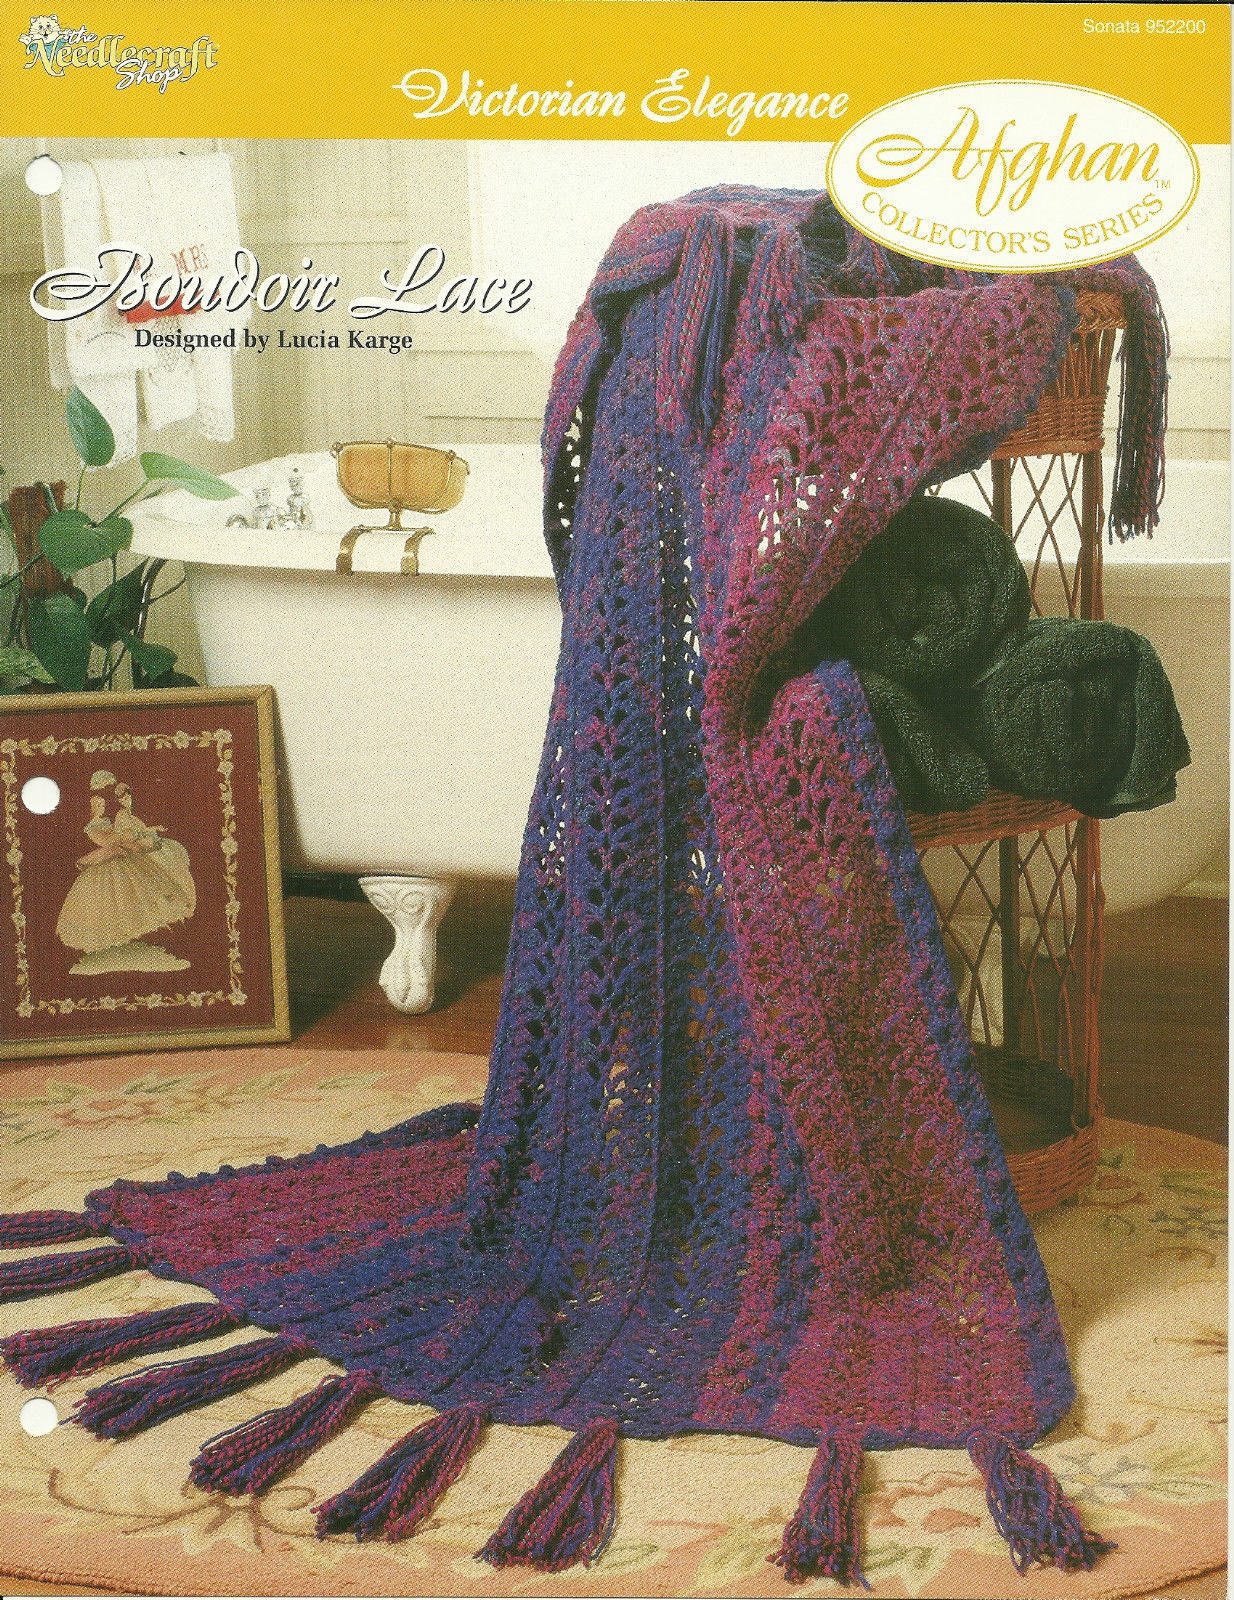 Needlecraft Shop Crochet Pattern 952200 Boudoir Lace Afghan Collectors Series - $2.99